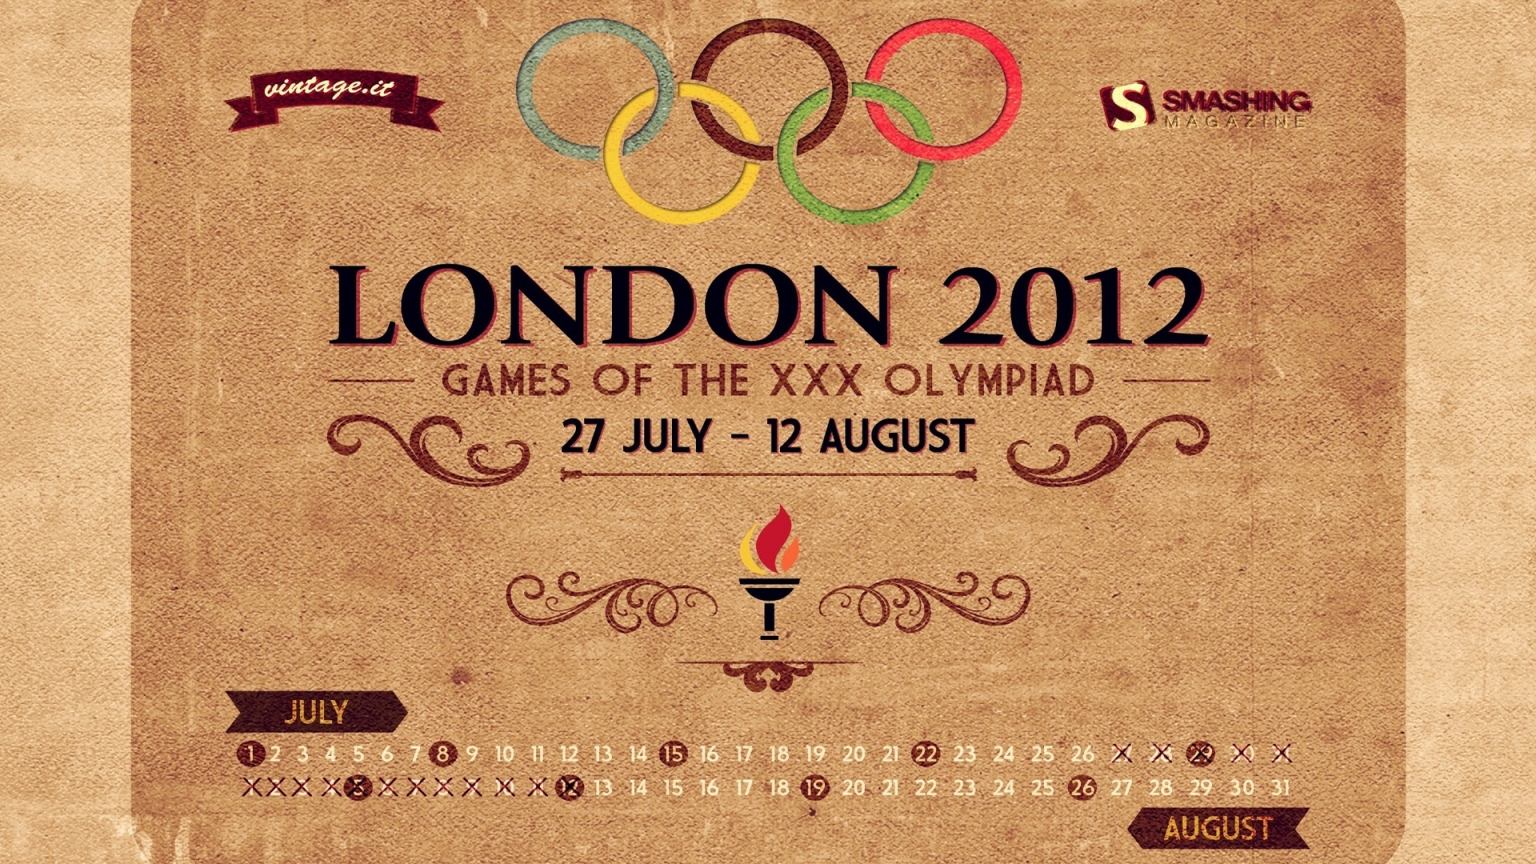 London 2012 Olympics for 1536 x 864 HDTV resolution